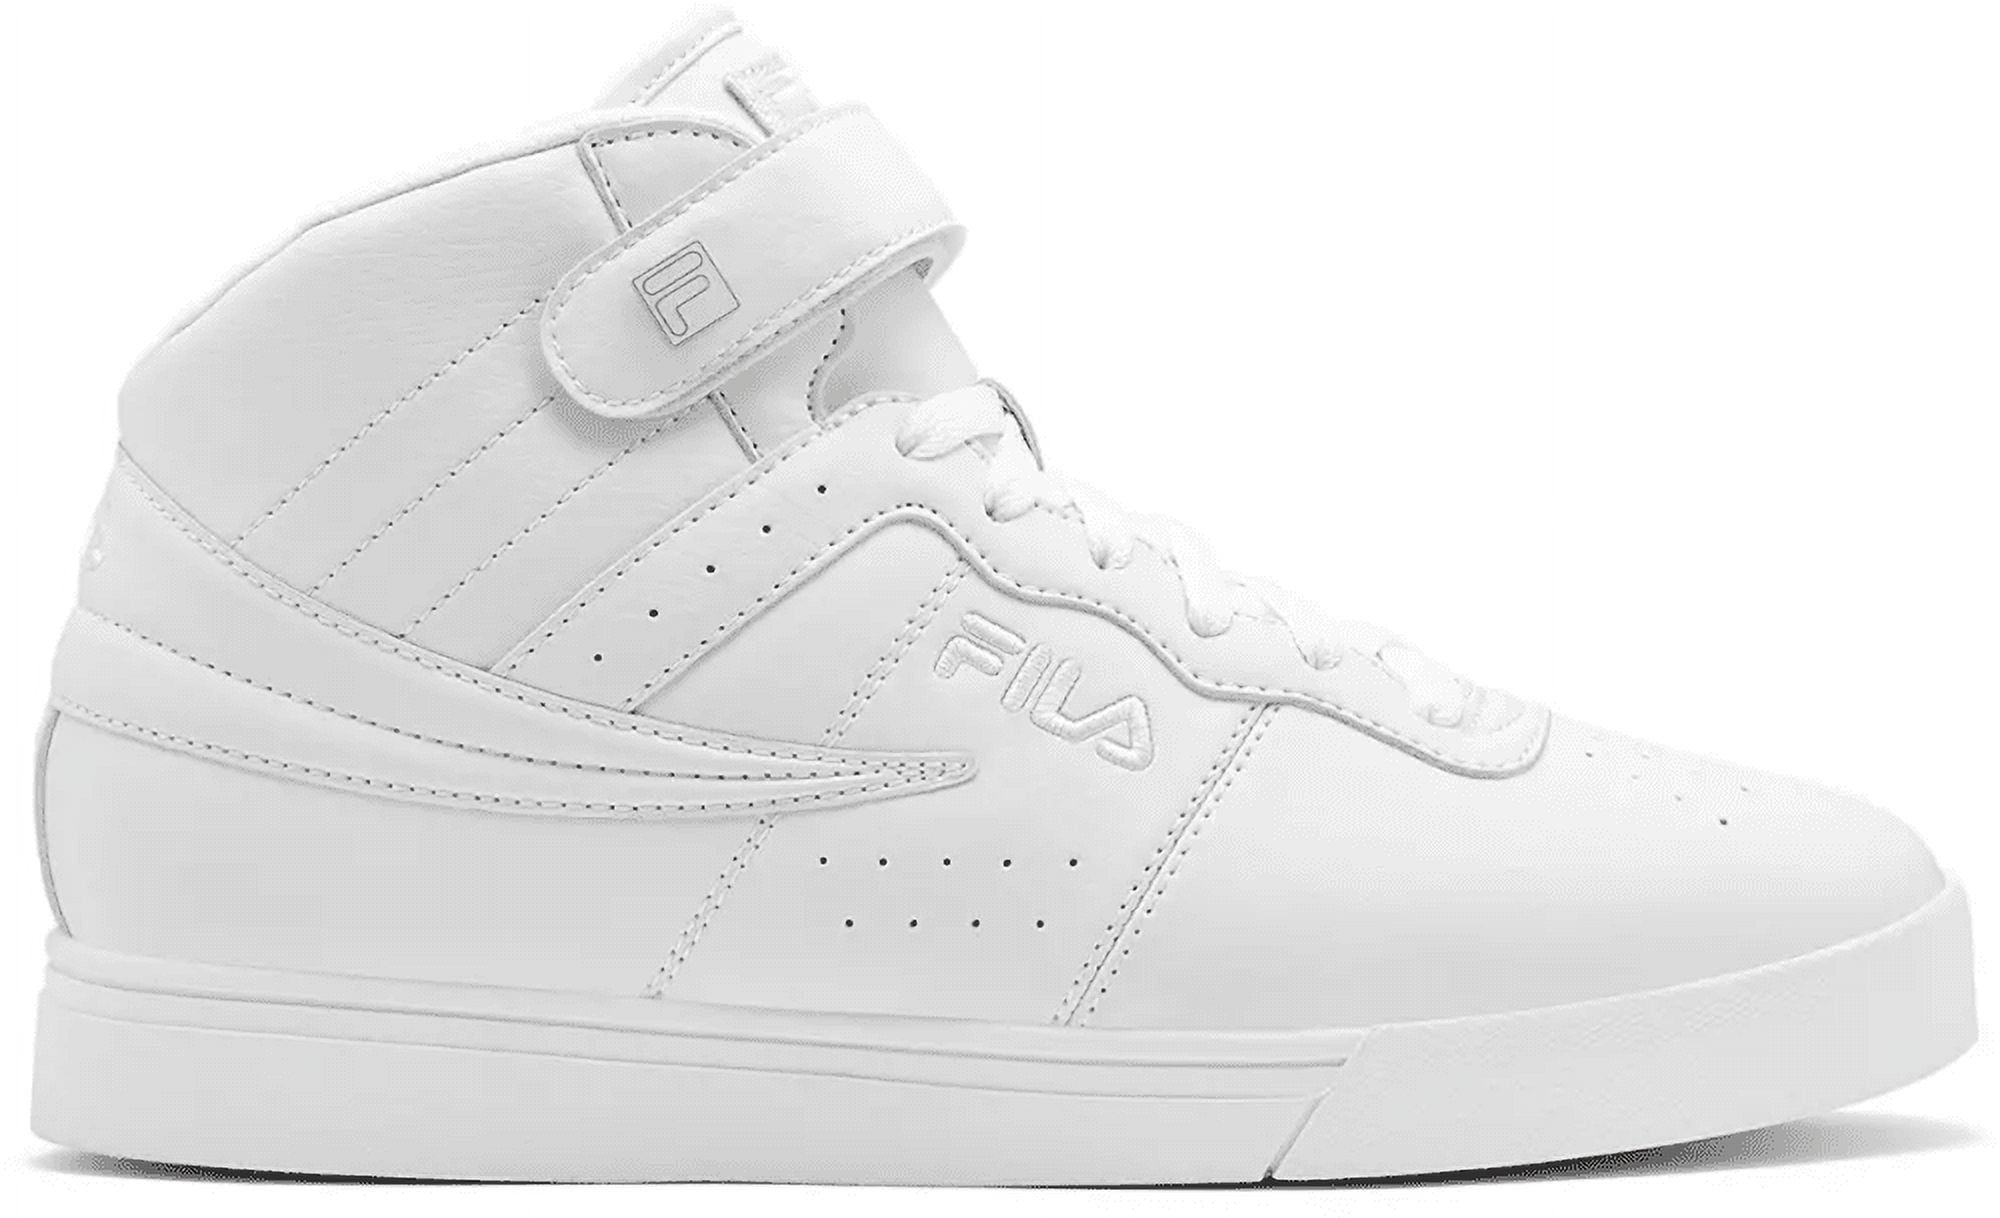 Mens Fila Vulc 13 Shoe Size: 9 White - White - White Fashion Sneakers ...